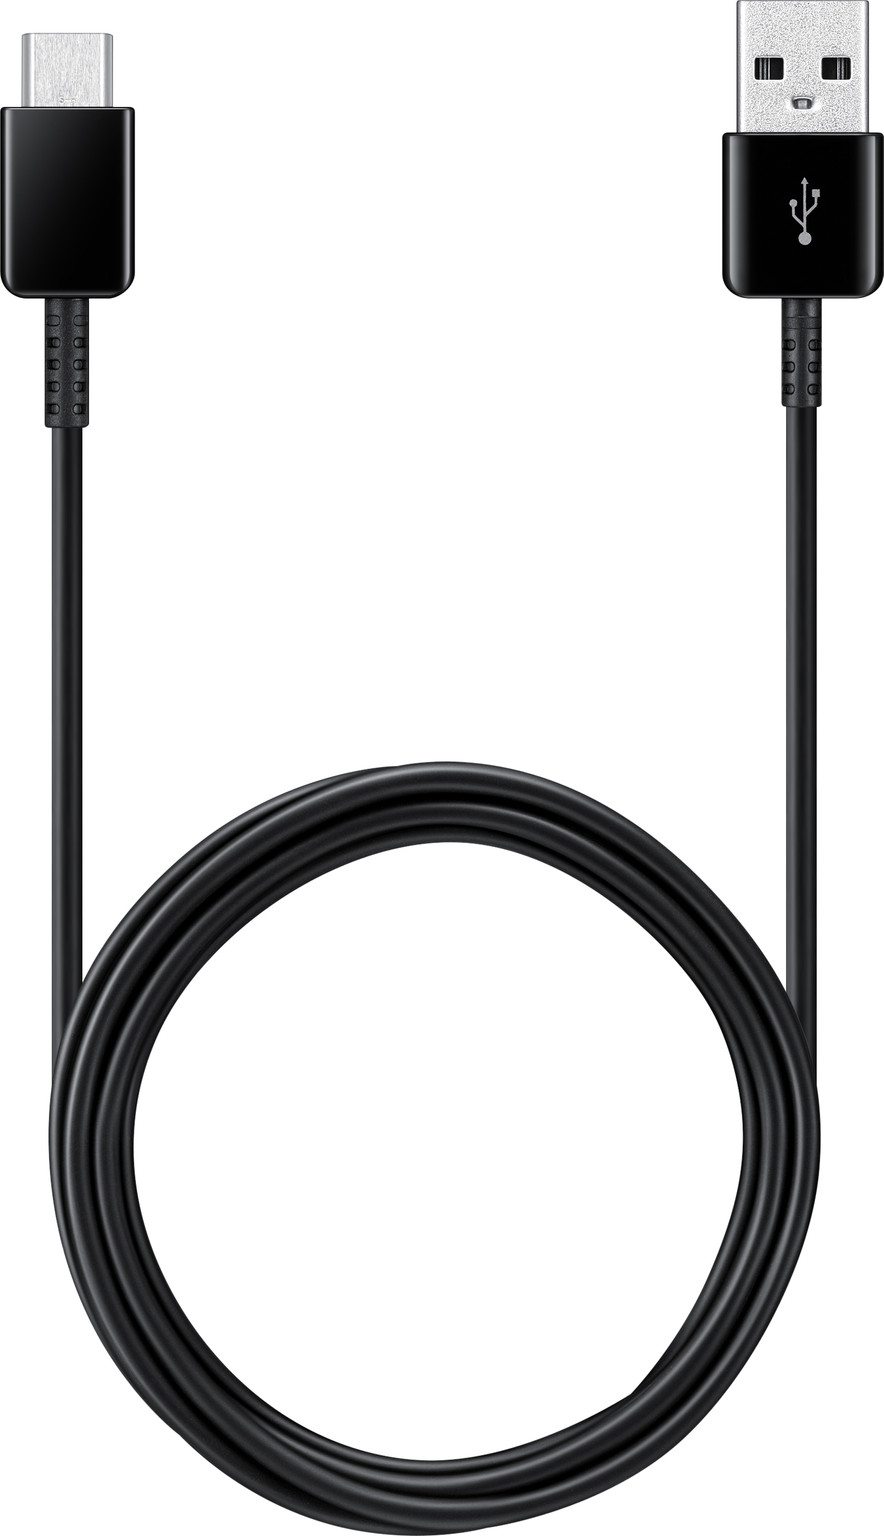 januari Executie Emulatie Samsung Galaxy A50 Oplaadkabel USB C 2 meter zwart - Gsm-Oplader.nl